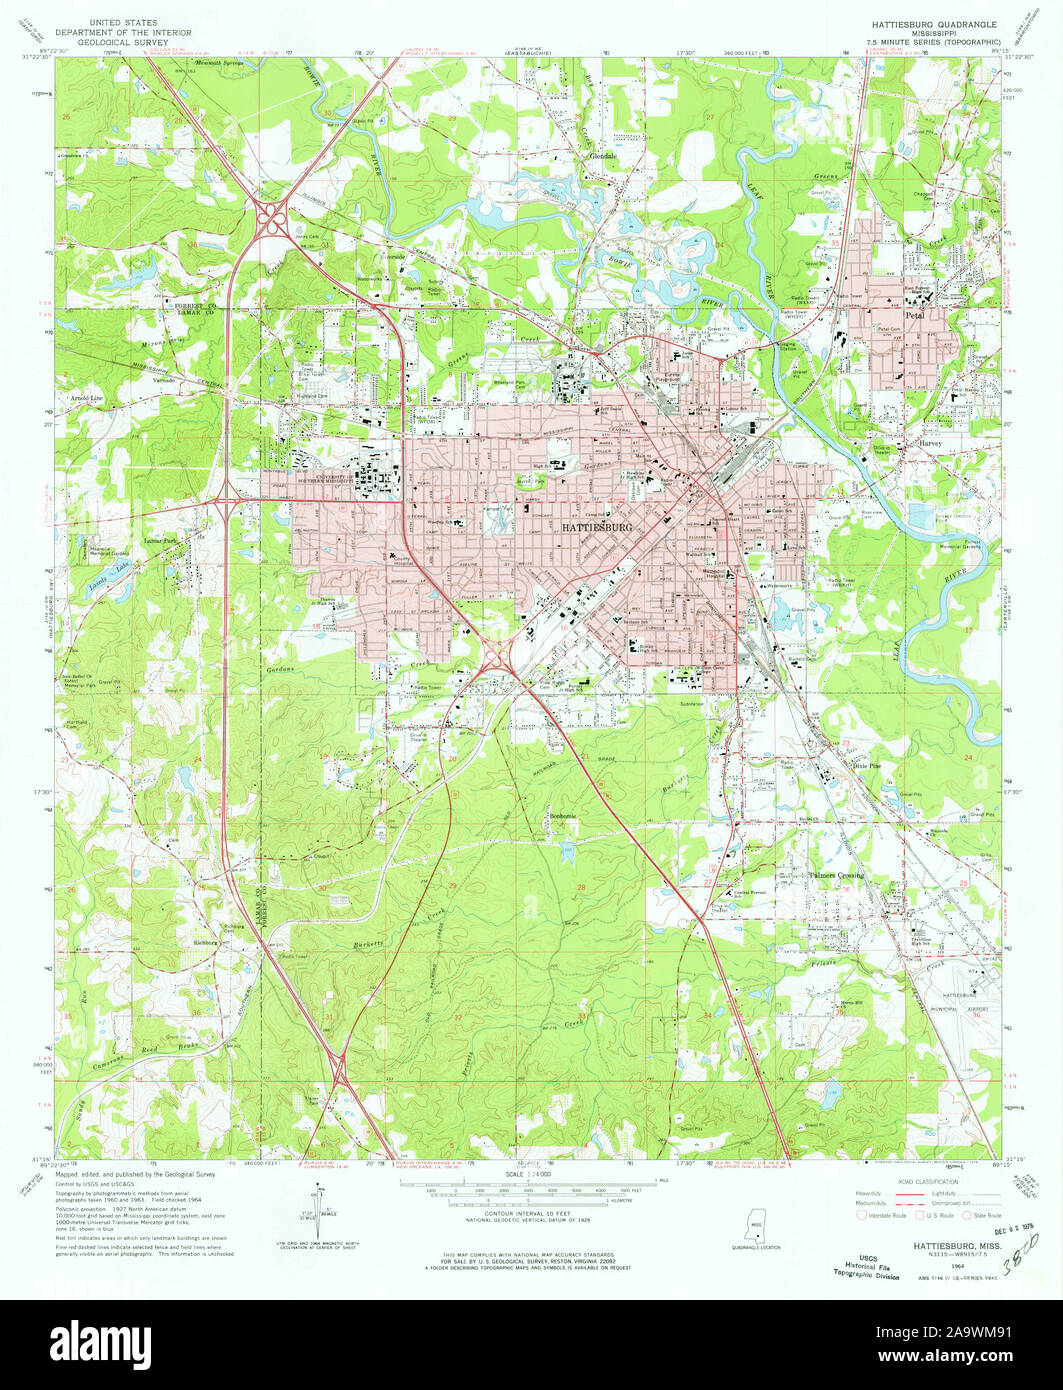 Usgs Topo Map Mississippi Ms Hattiesburg 335769 1964 24000 Restoration 2A9WM91 